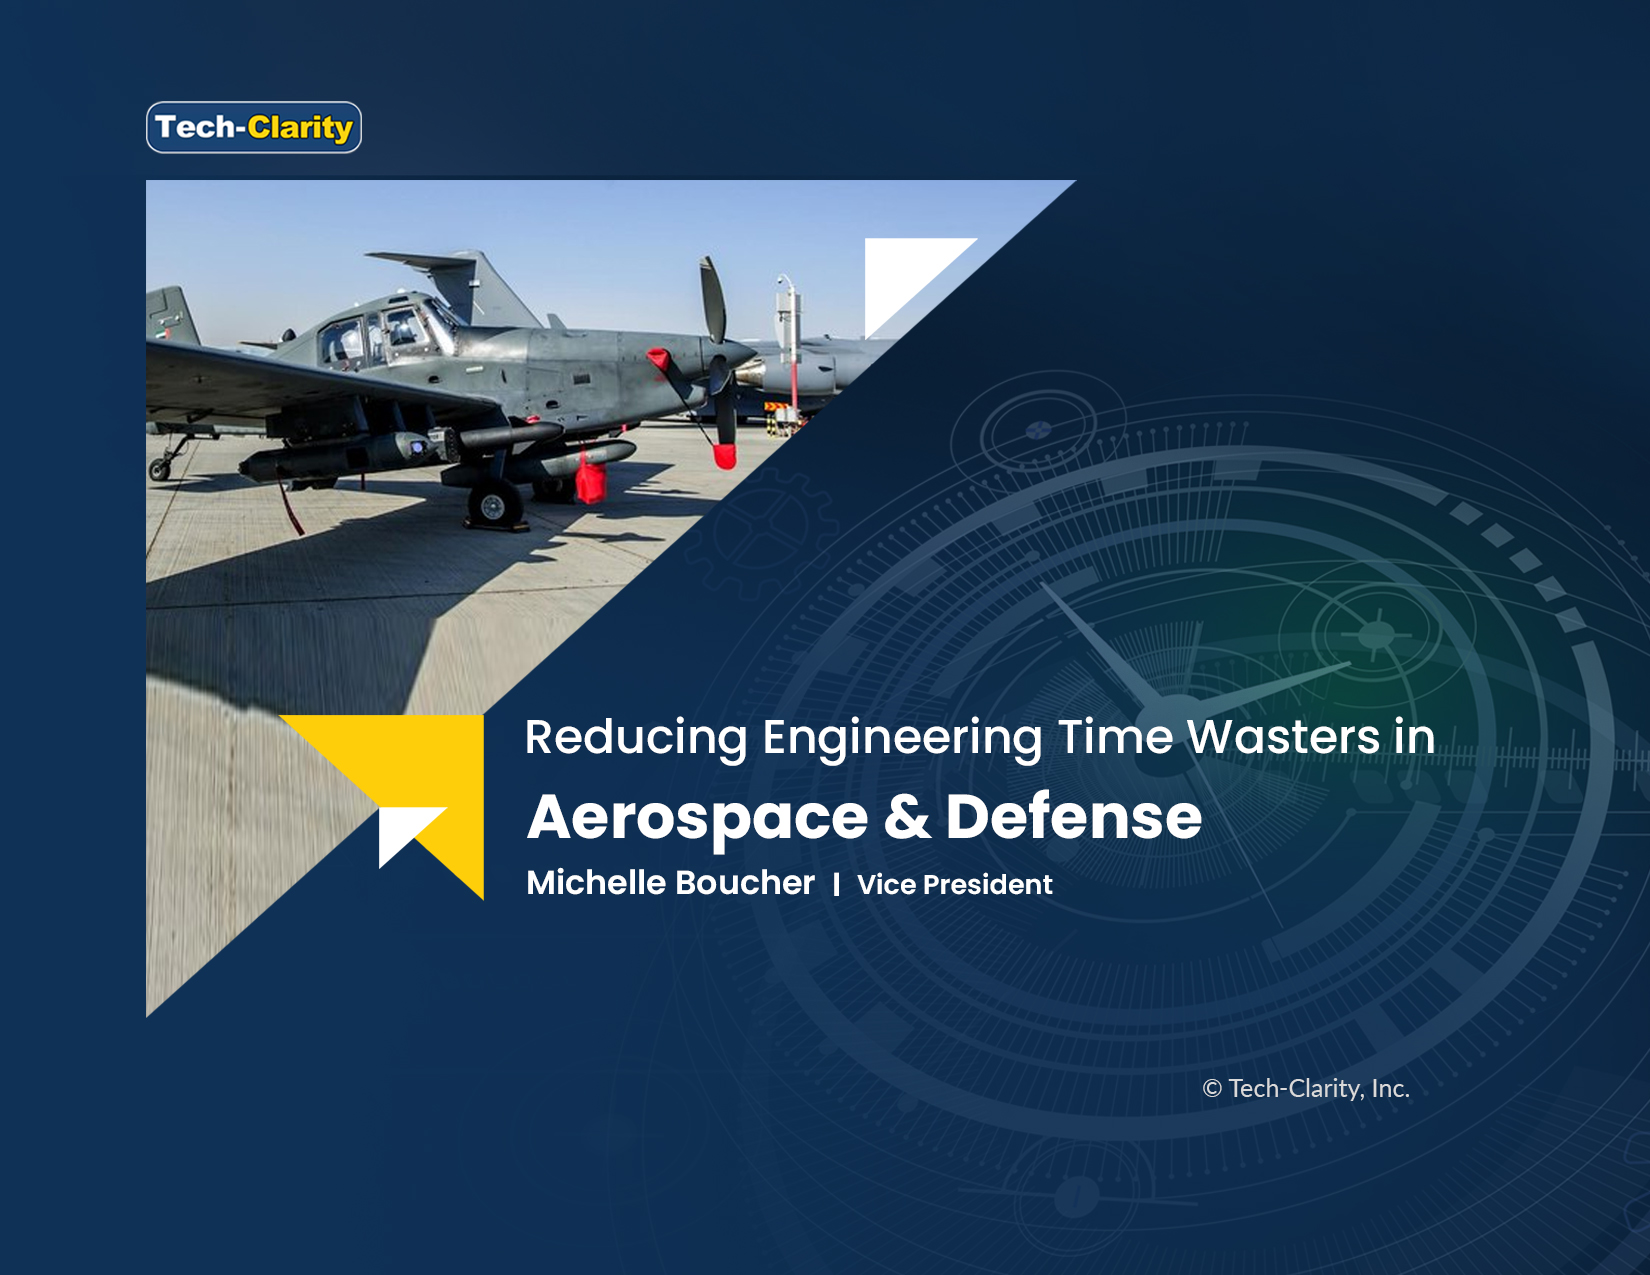 Aerospace and Defense